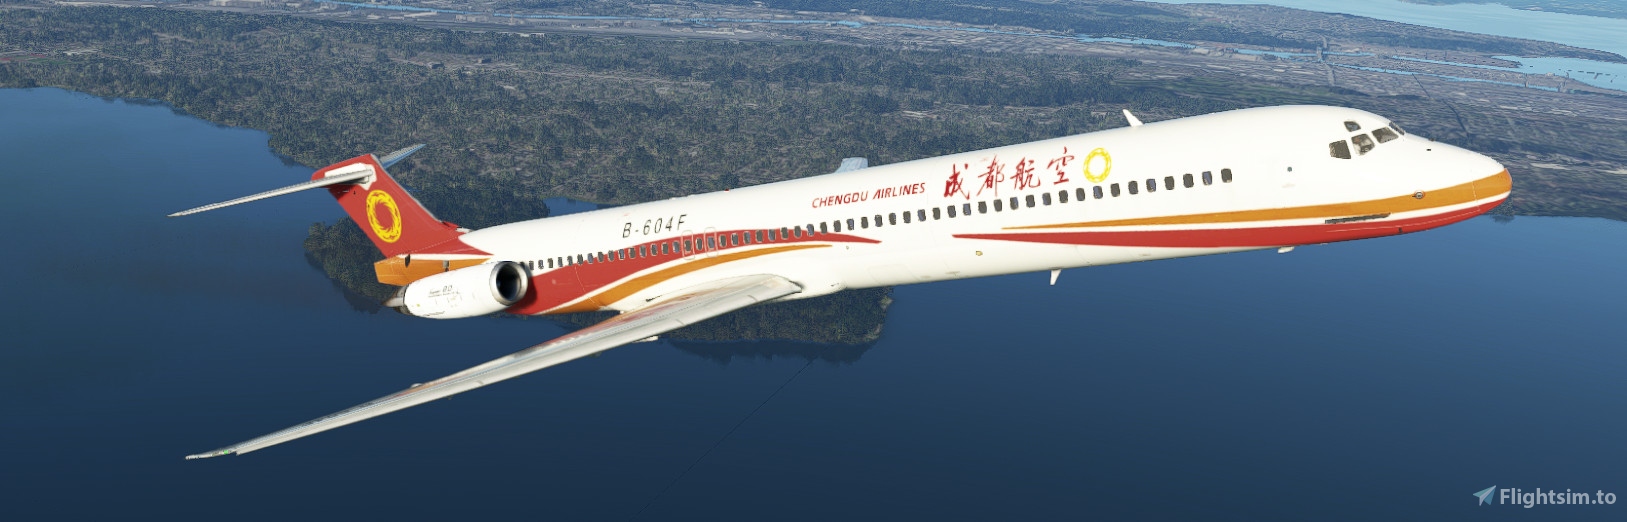 MD83 成都航空Chengdu Airlines B-604F（虛構塗裝） for Microsoft 